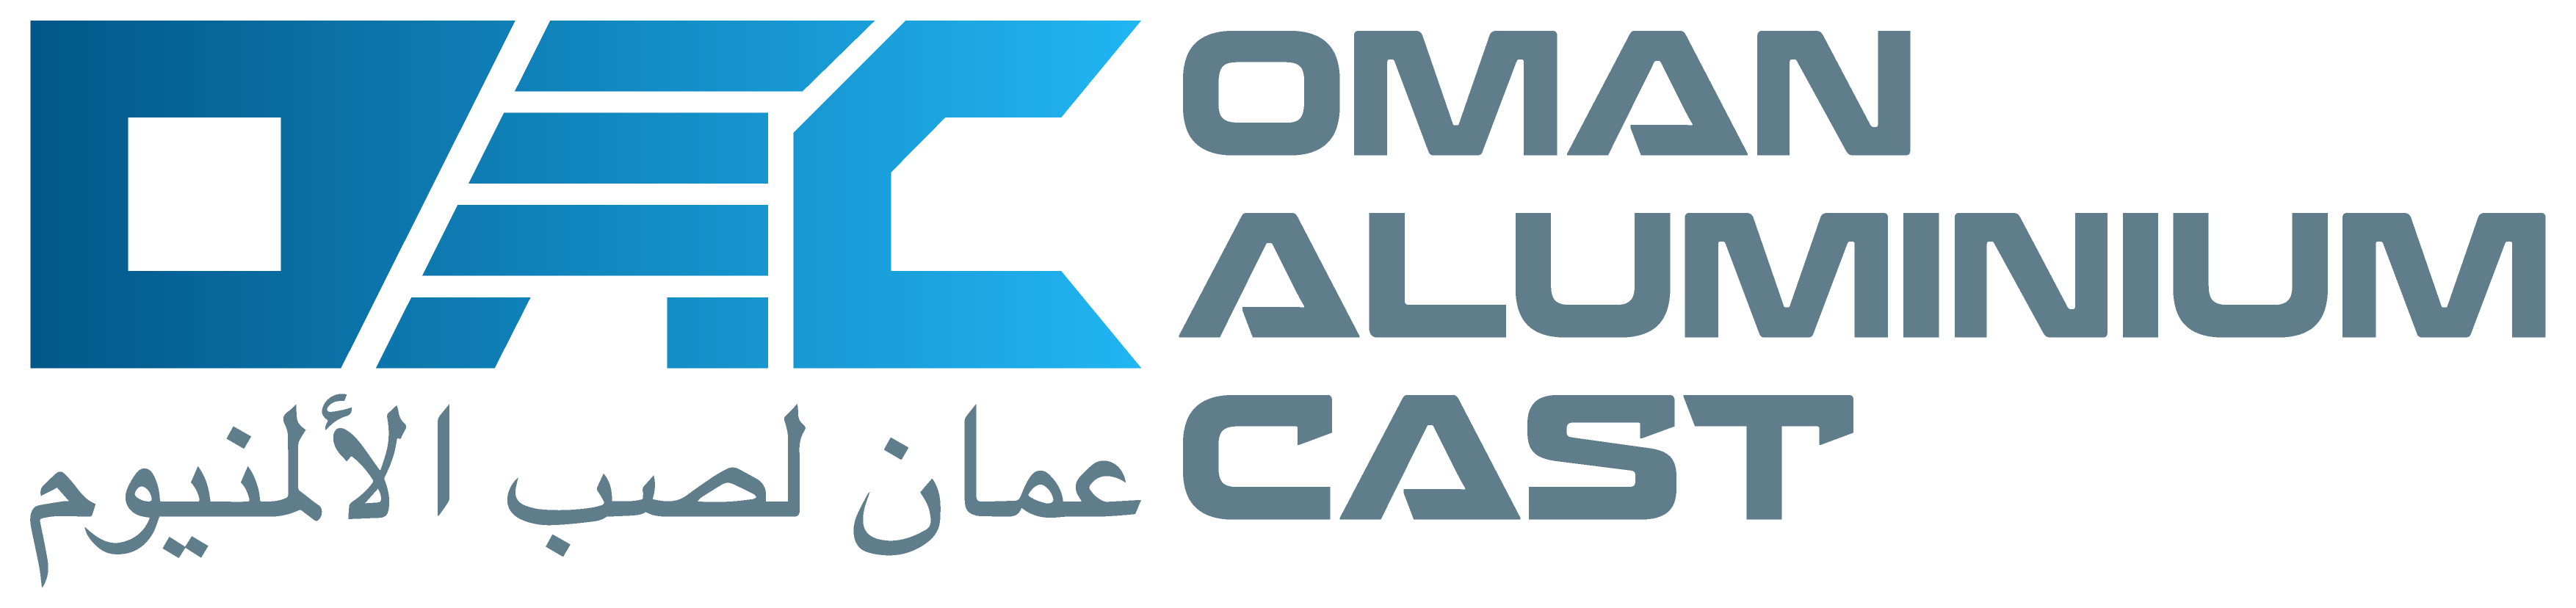 Oman Aluminium Cast